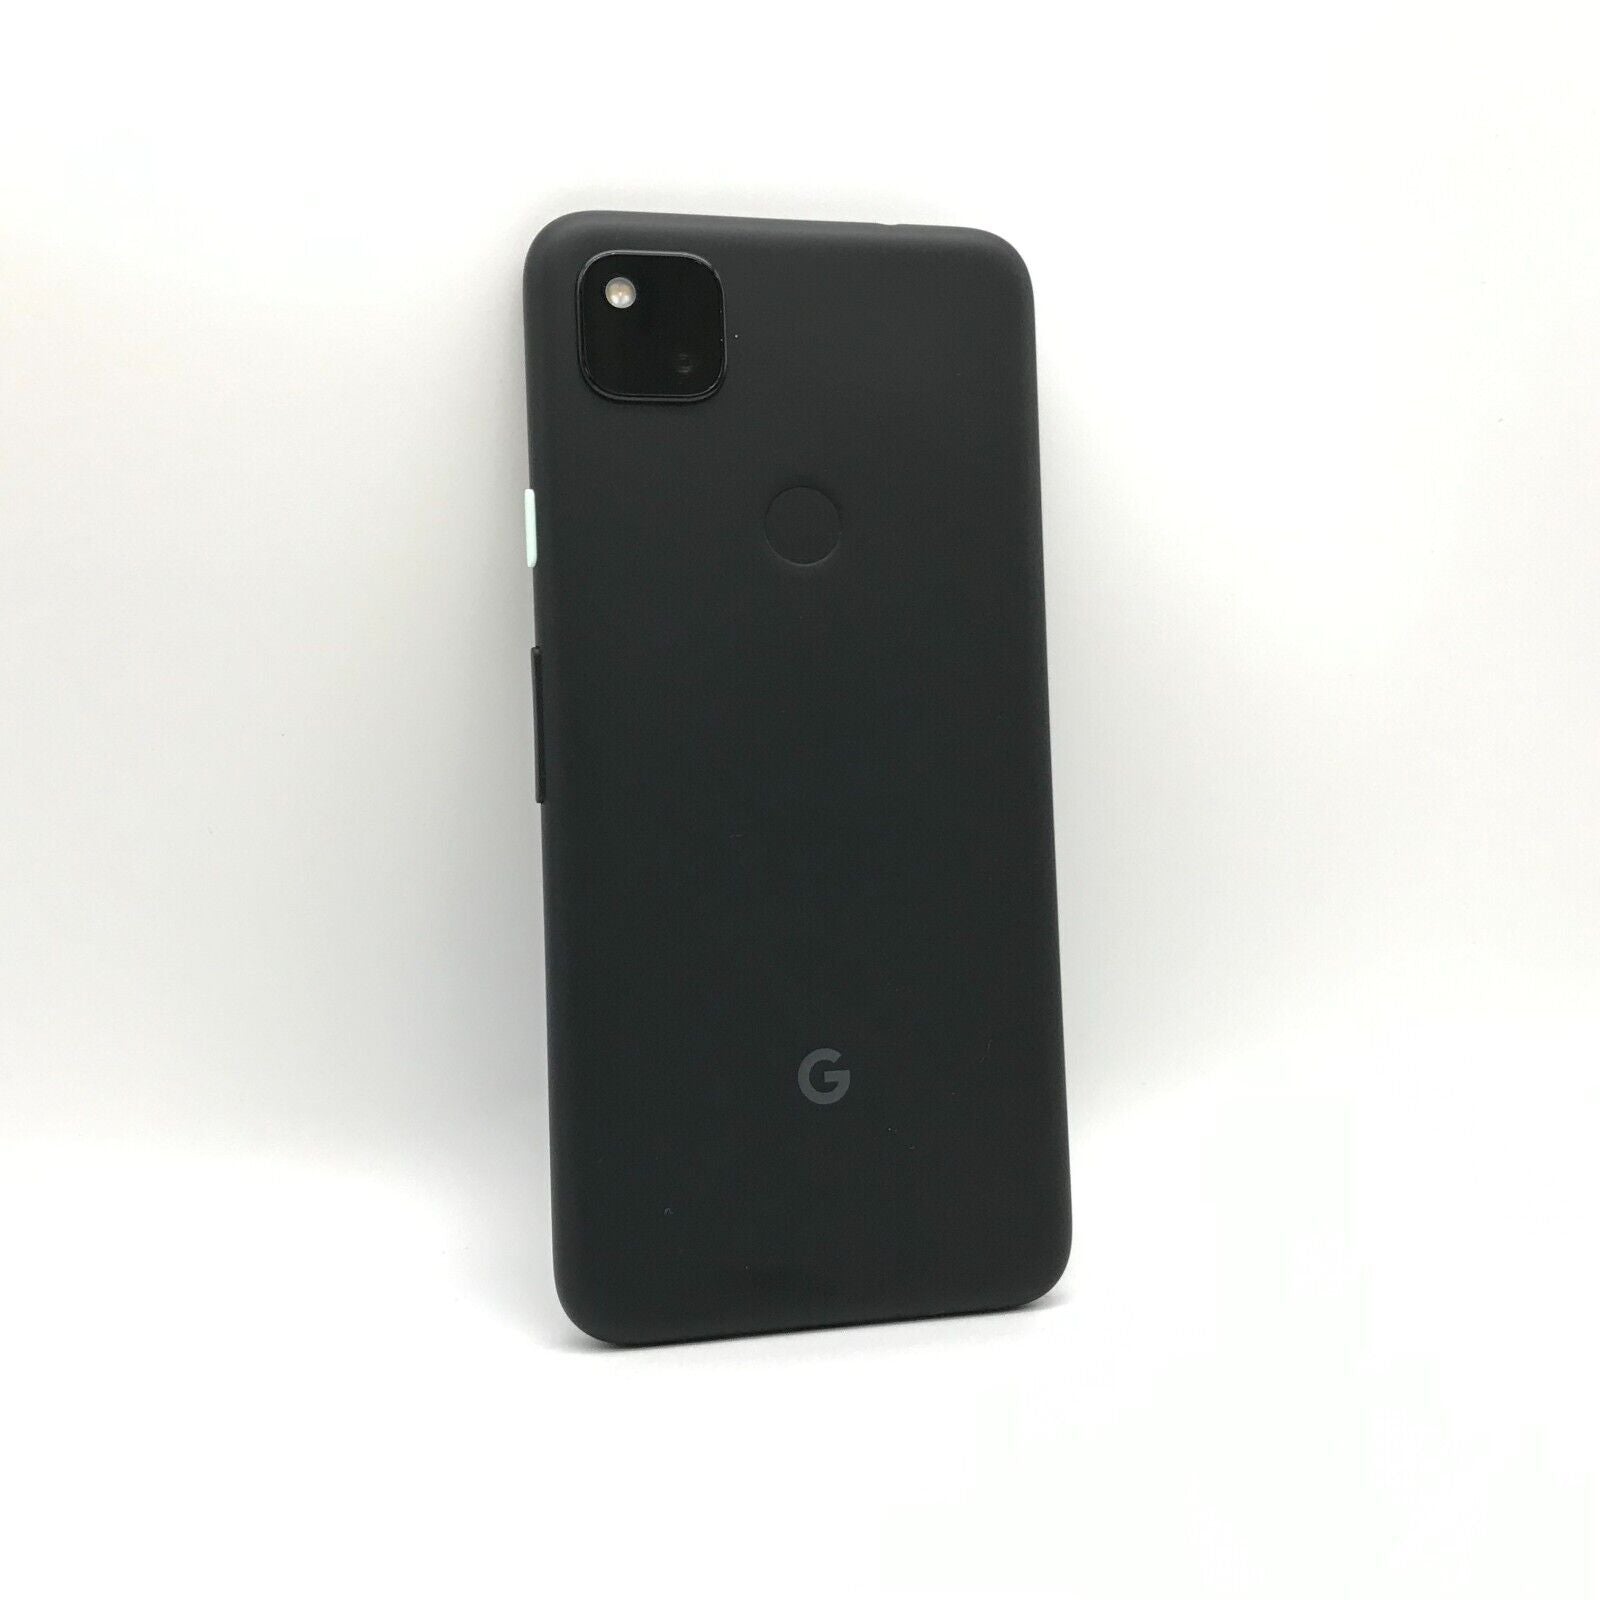 Google Pixel 4a 128GB Just Black (Verizon) – ItsWorthMore